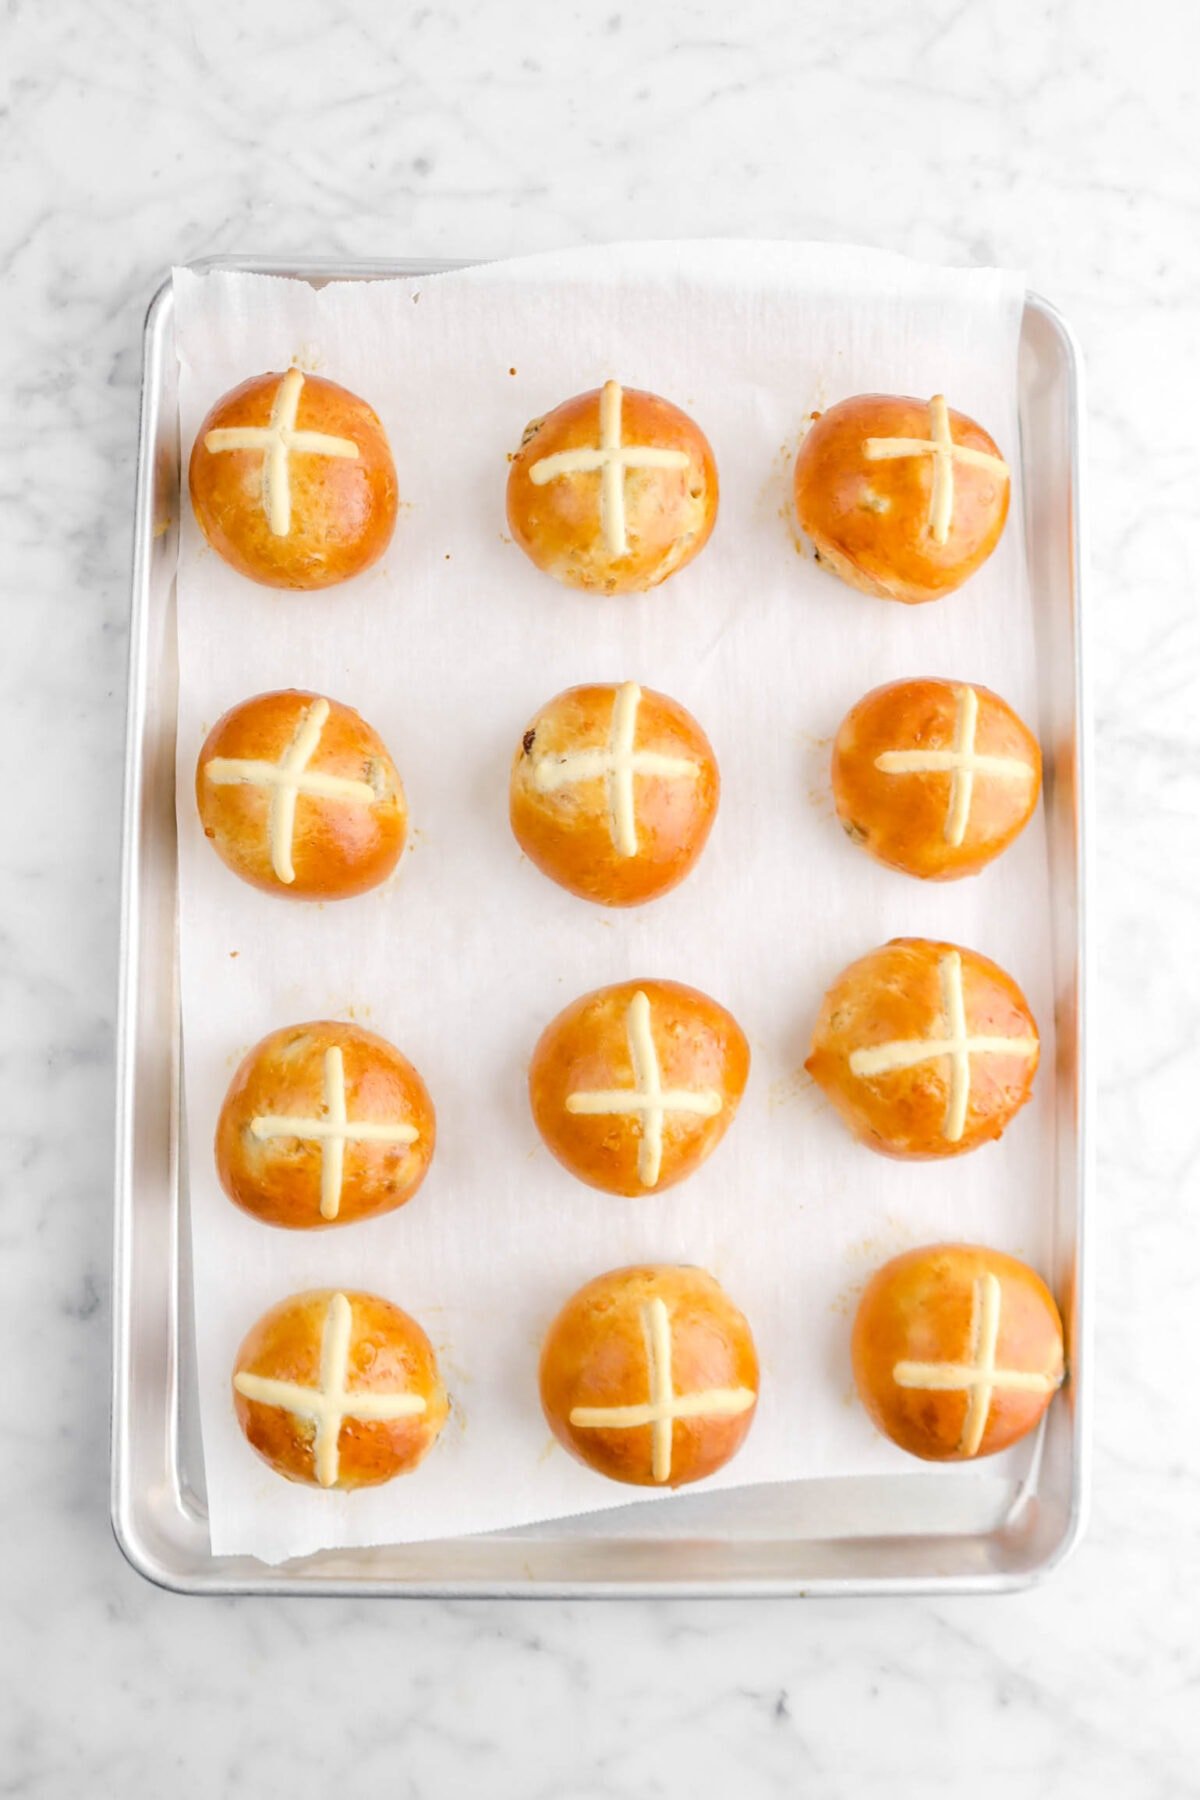 baked hot cross buns on sheet pan